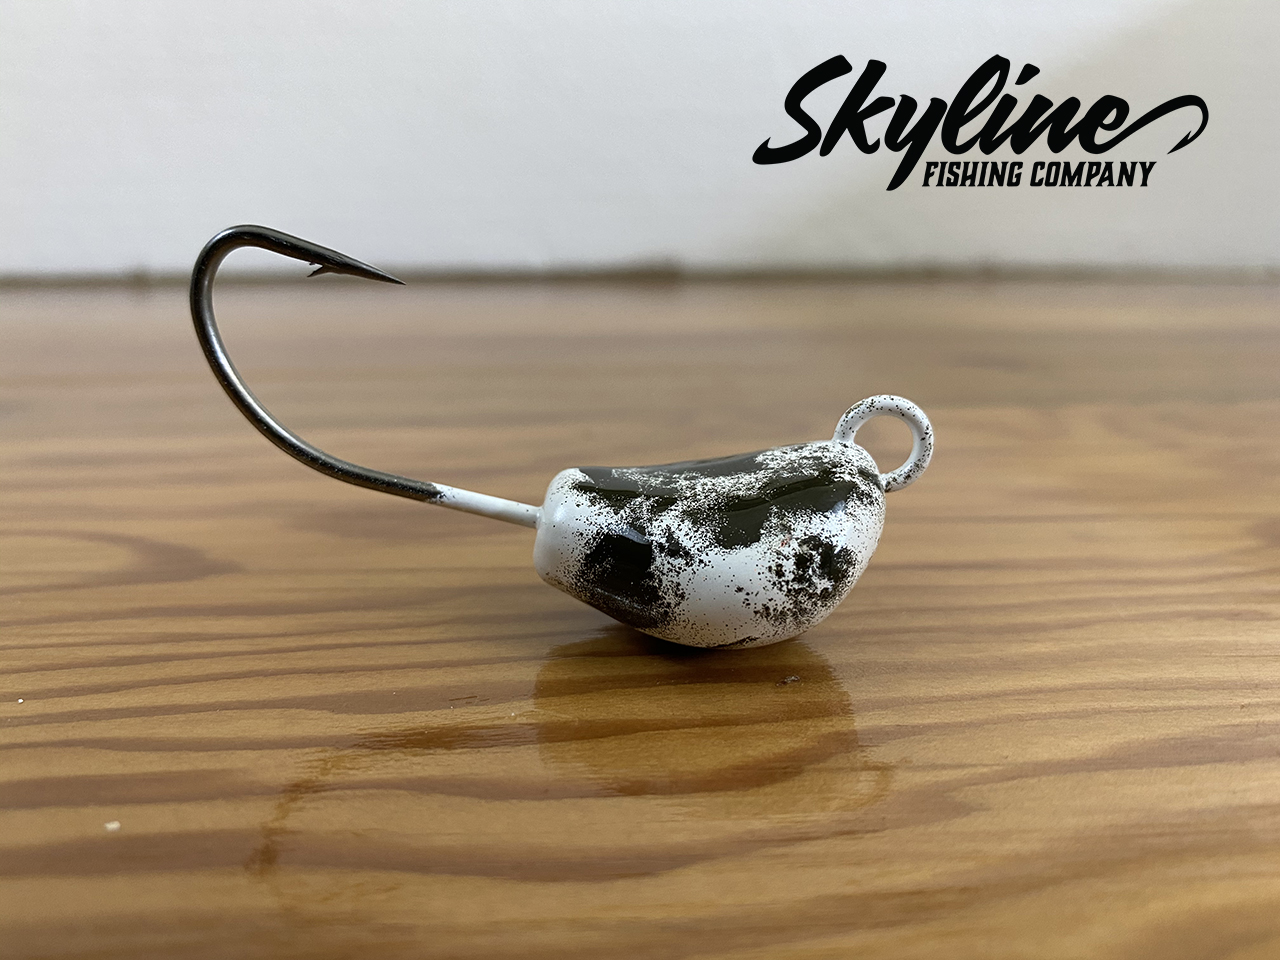 Custom Fishing Jigs - Skyline Fishing Company, Snook Jigs, Jig